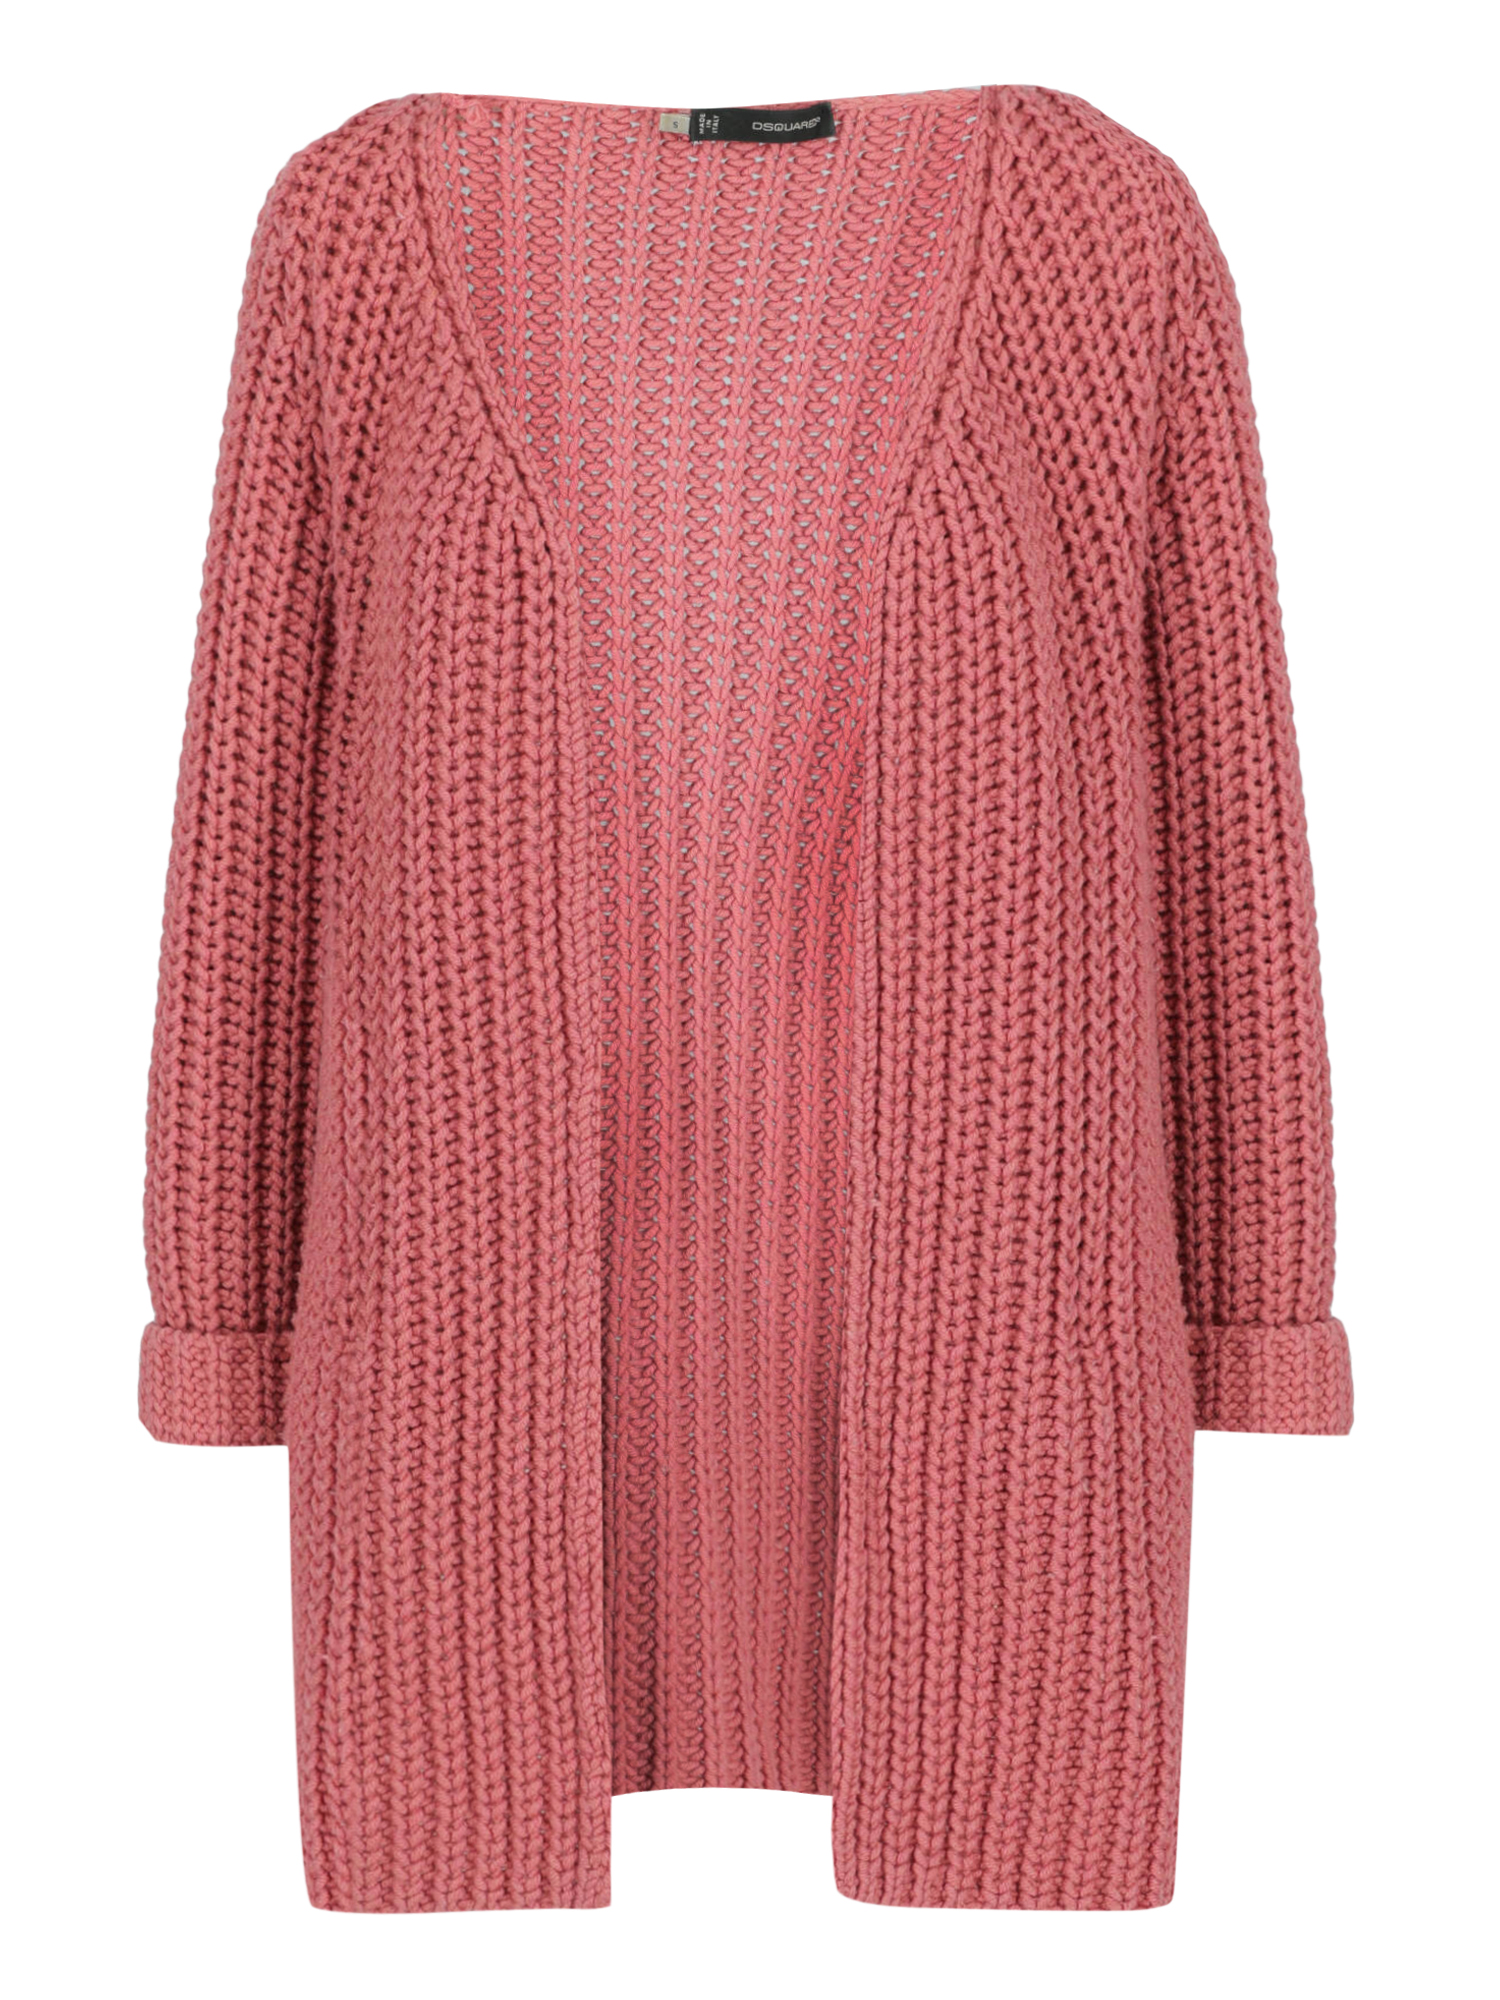 Pulls Et Sweat-shirts Pour Femme - Dsquared2 - En Wool Pink - Taille:  -